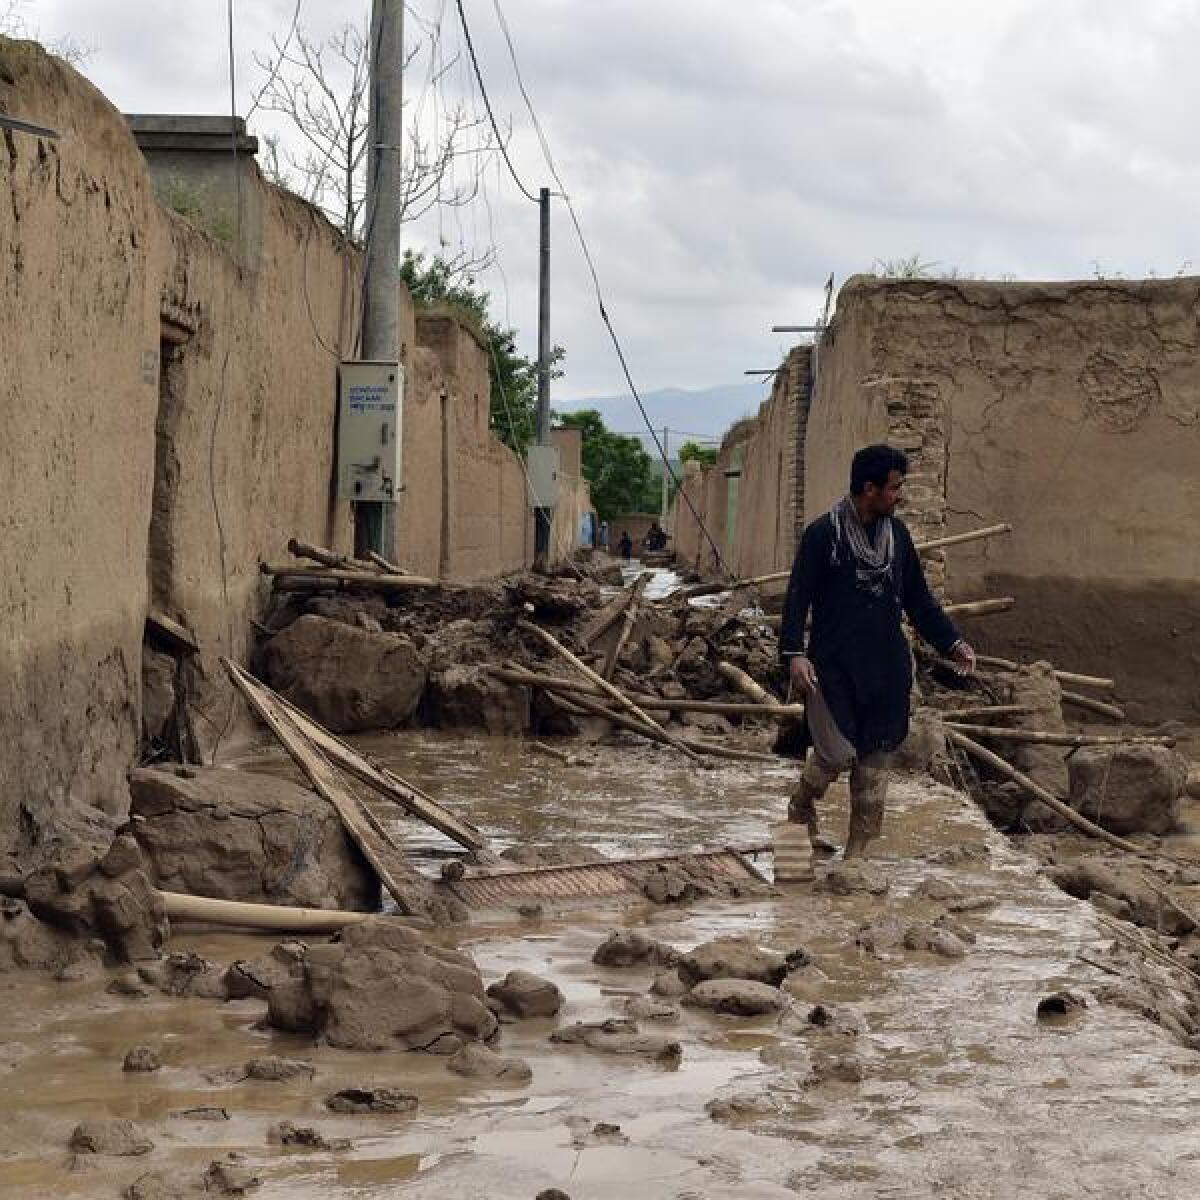 Afghanistan flash floods